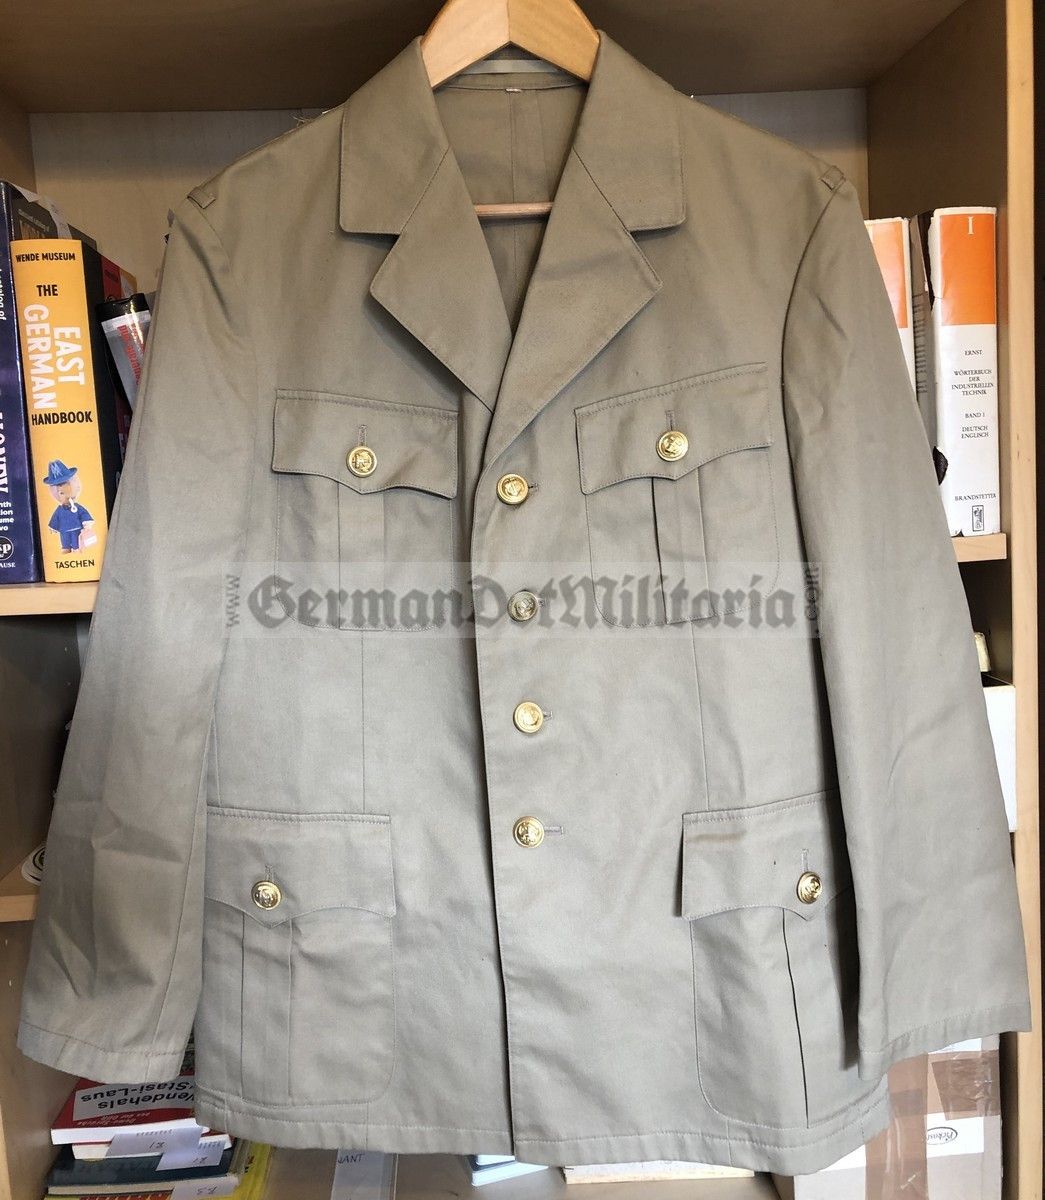 wo313 - Bundesmarine Navy tropical Uniform jacket - c1987 dated - medium  size - GermanDotMilitaria